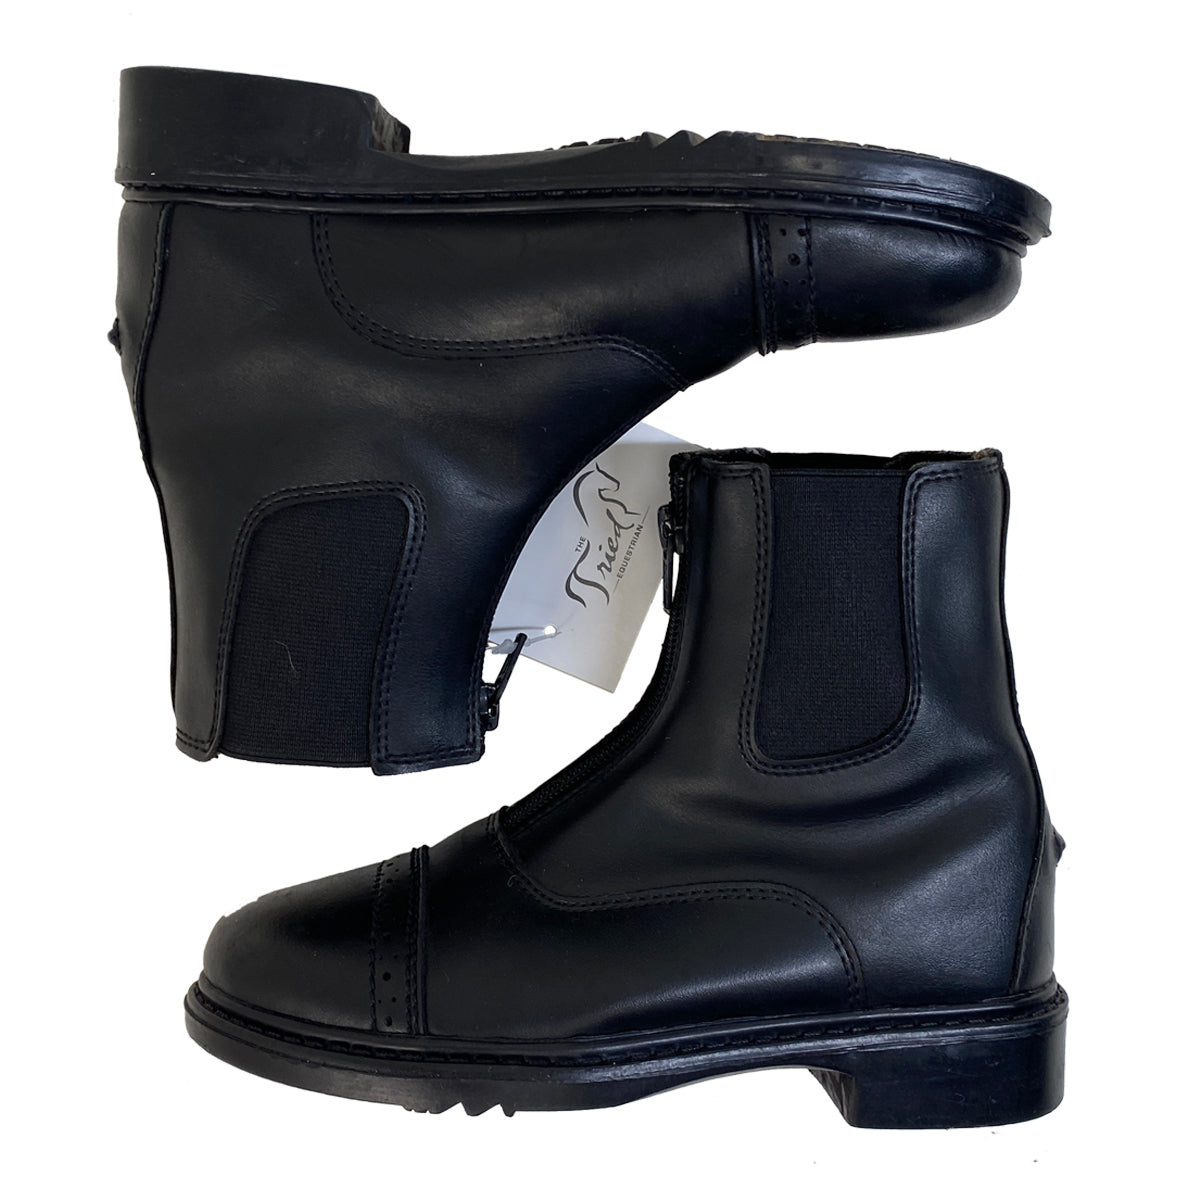 TuffRider Starter Paddock Boots in Black